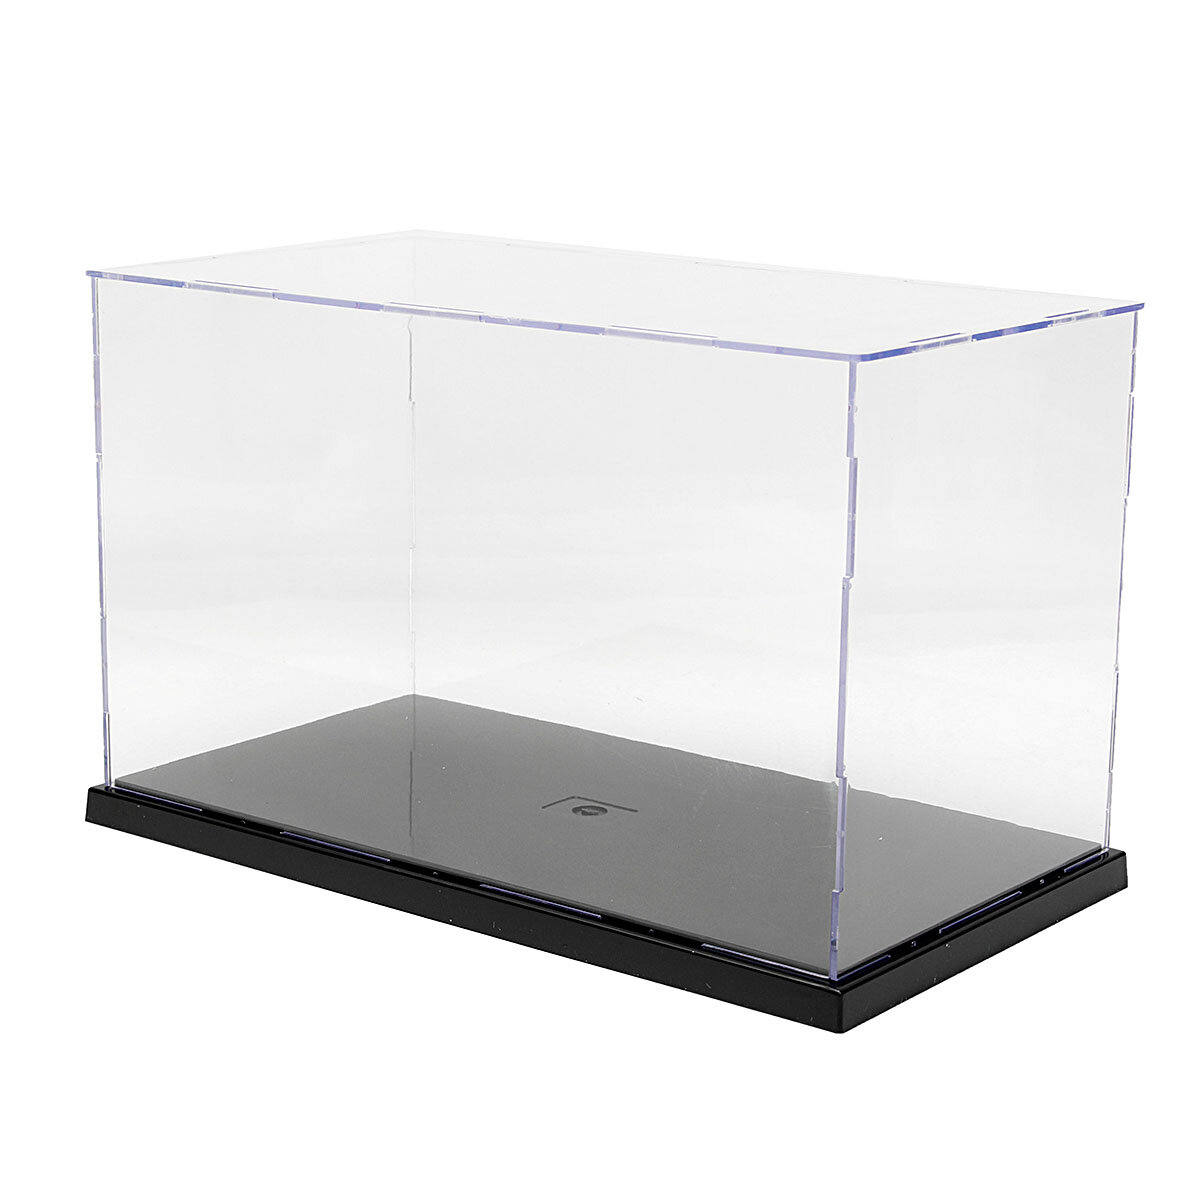 31x17x19cm Transparante display van acryl Showcasebox Plastic stofdichte beschermingsschaal